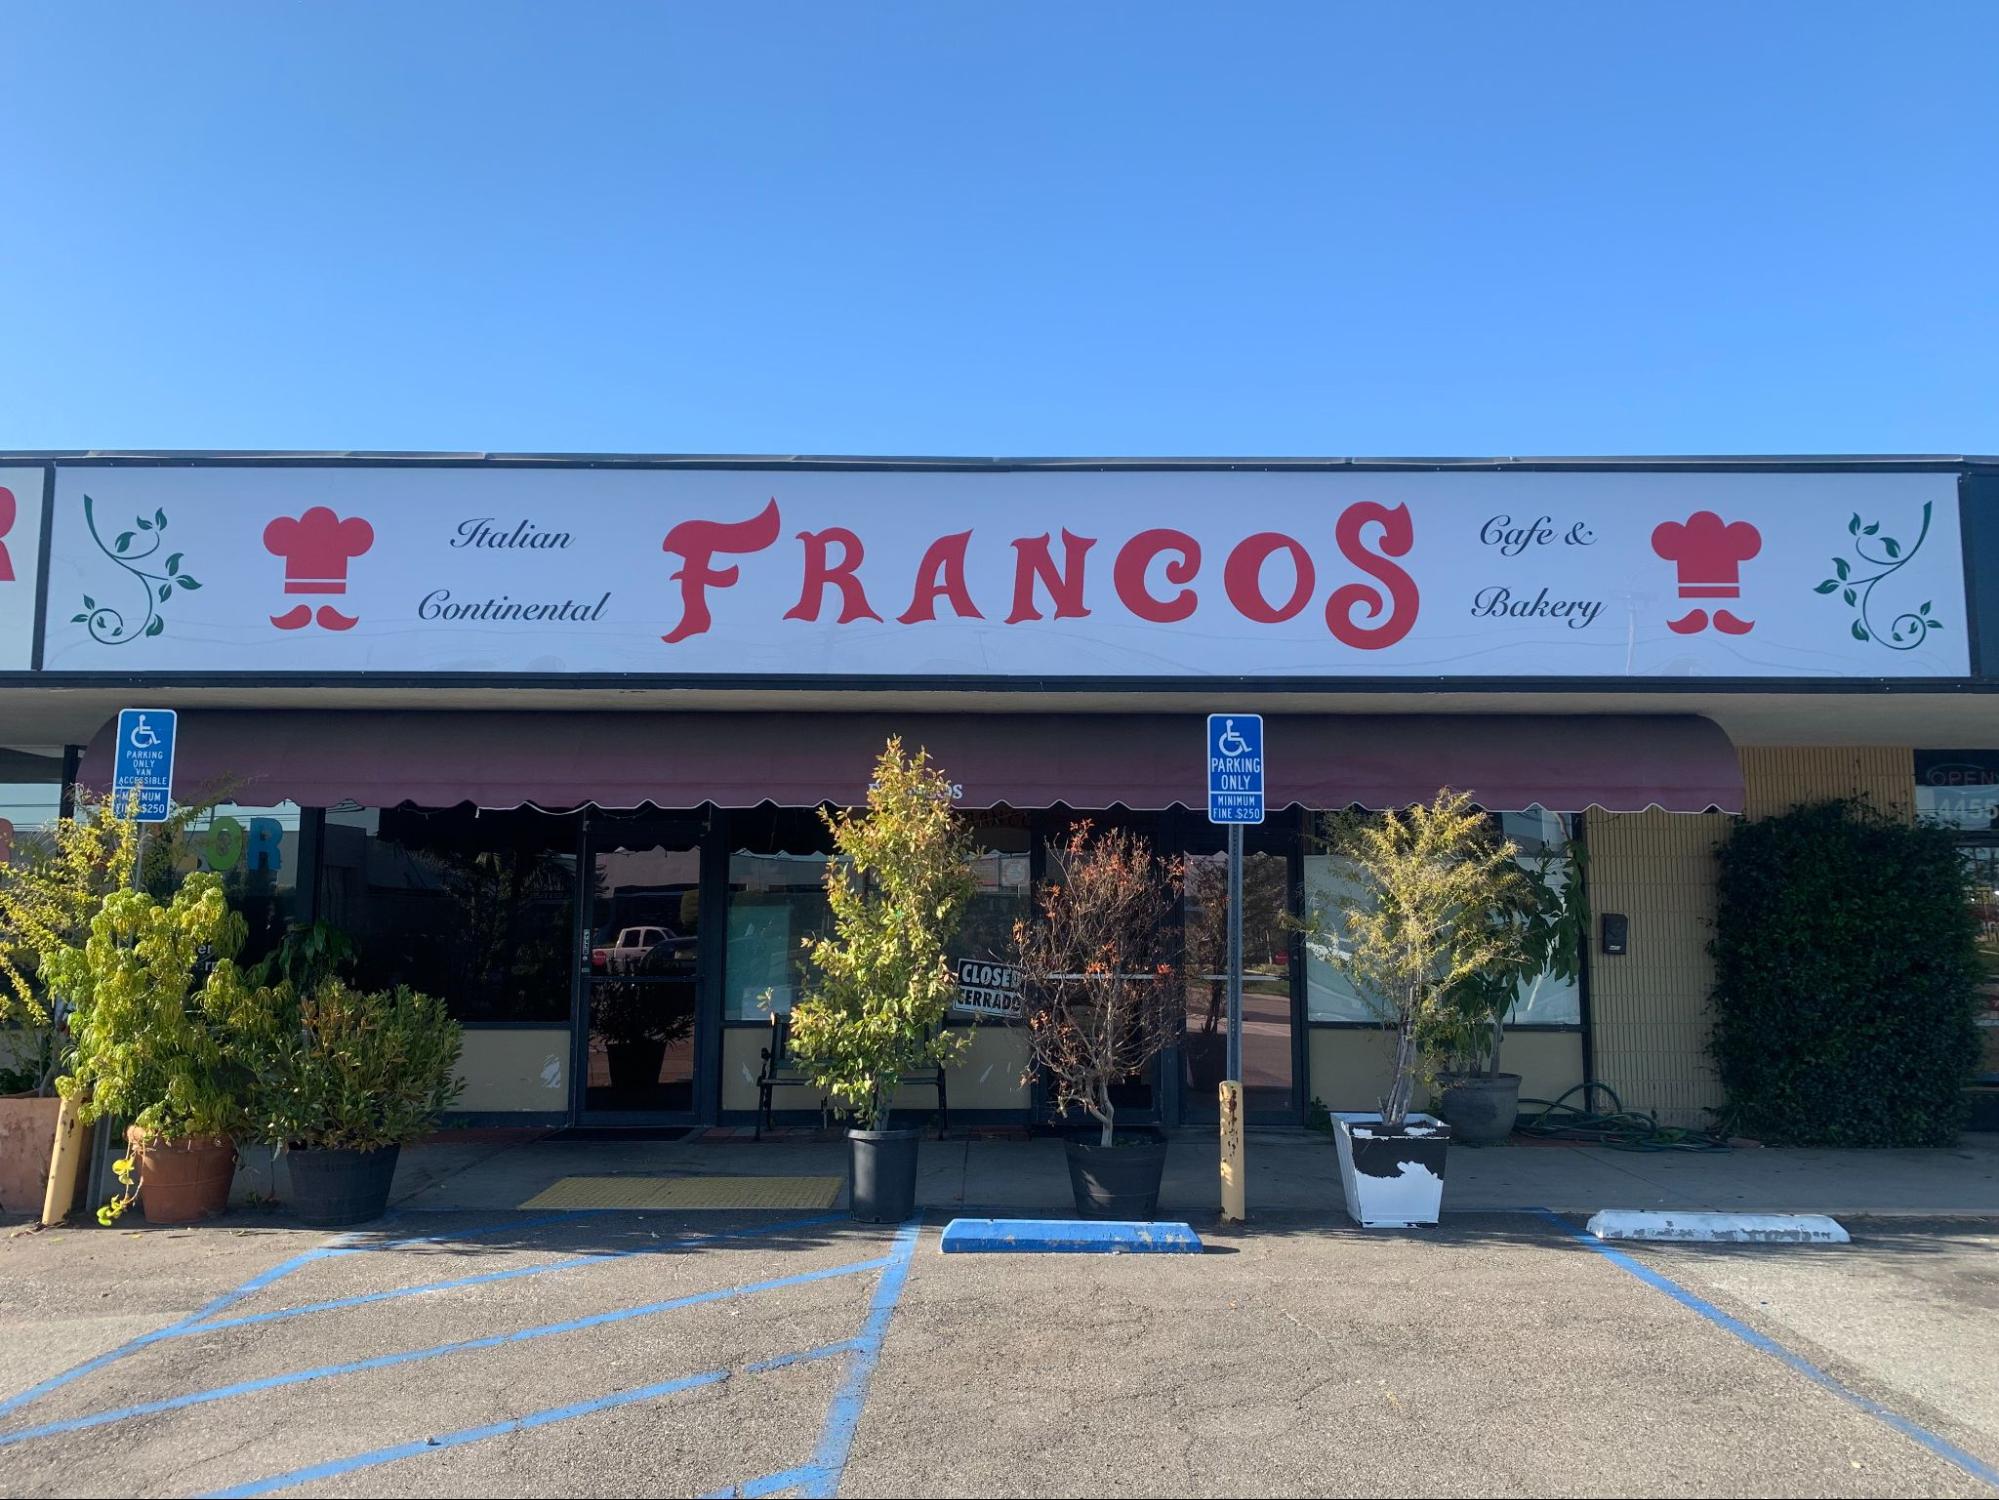 Francos Cafe & Bakery sign